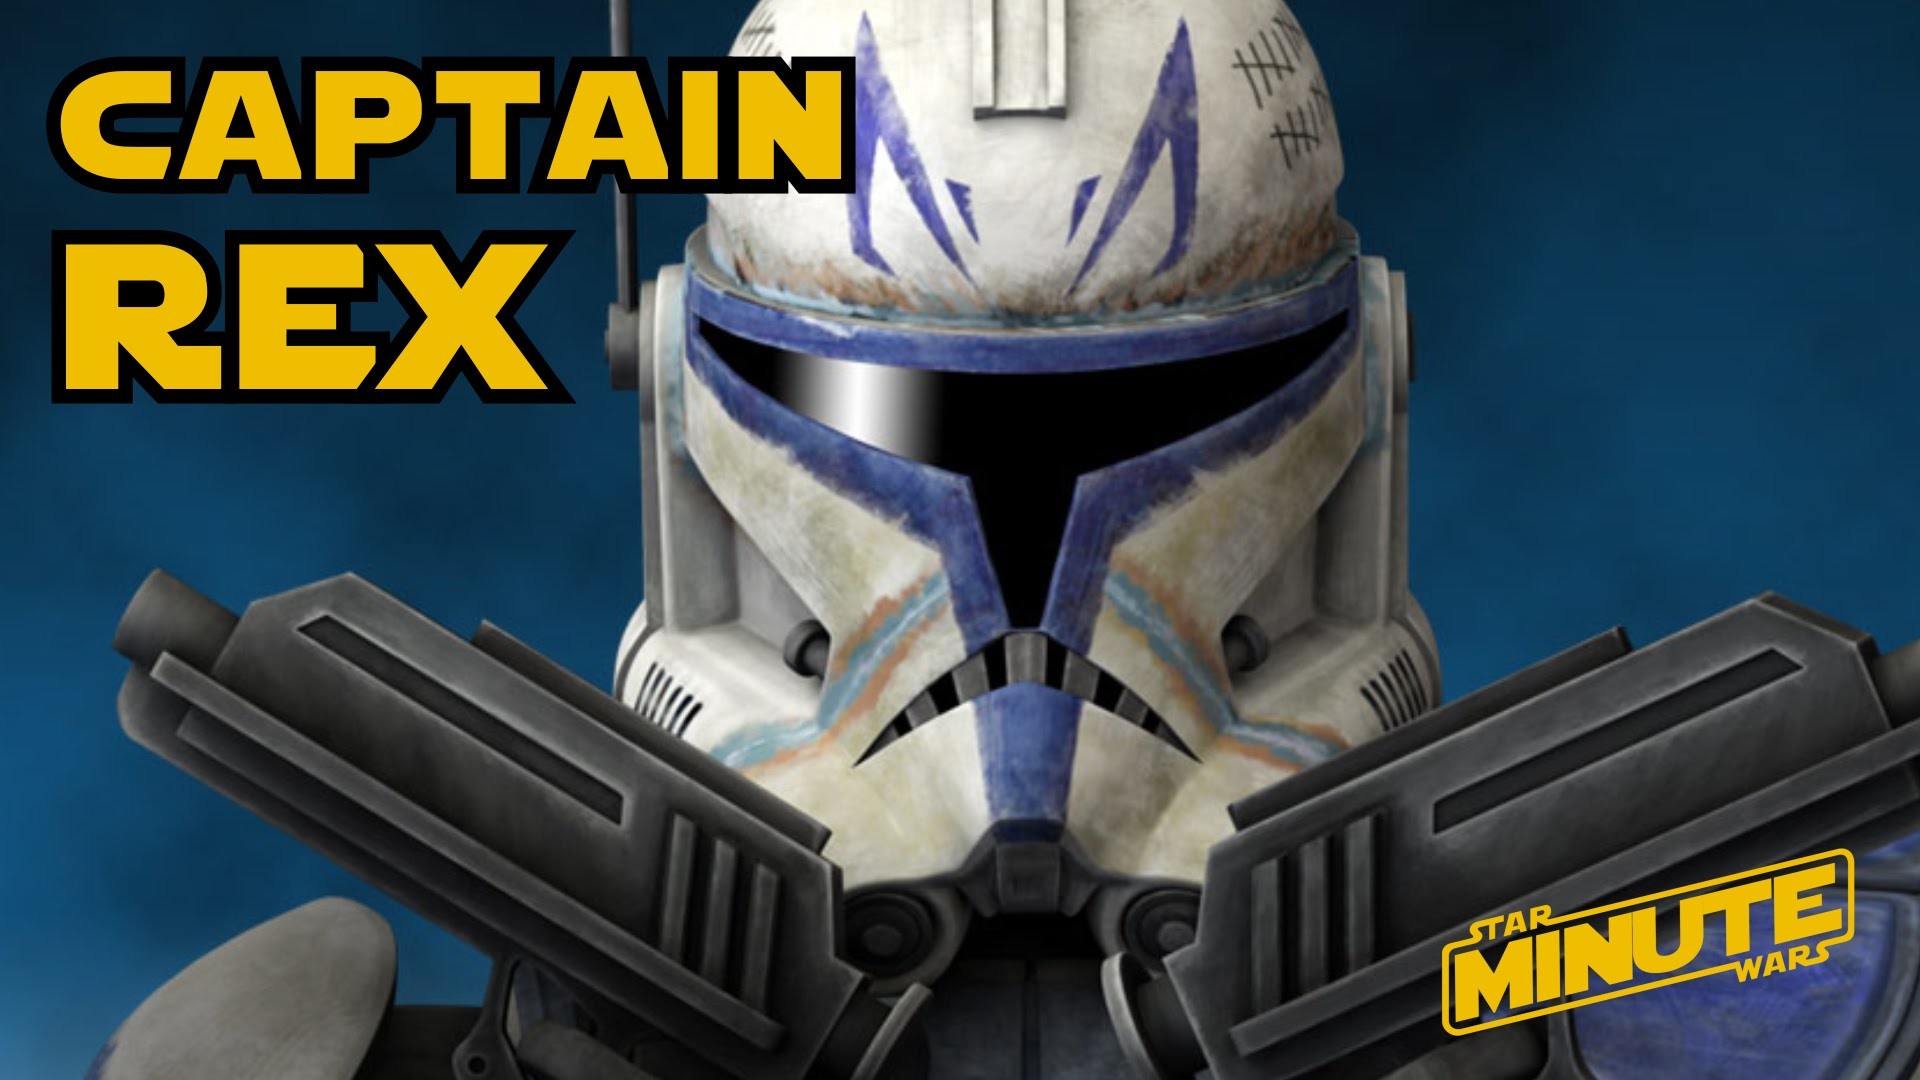 captain rex wallpaper,helmet,action figure,fictional character,personal protective equipment,games